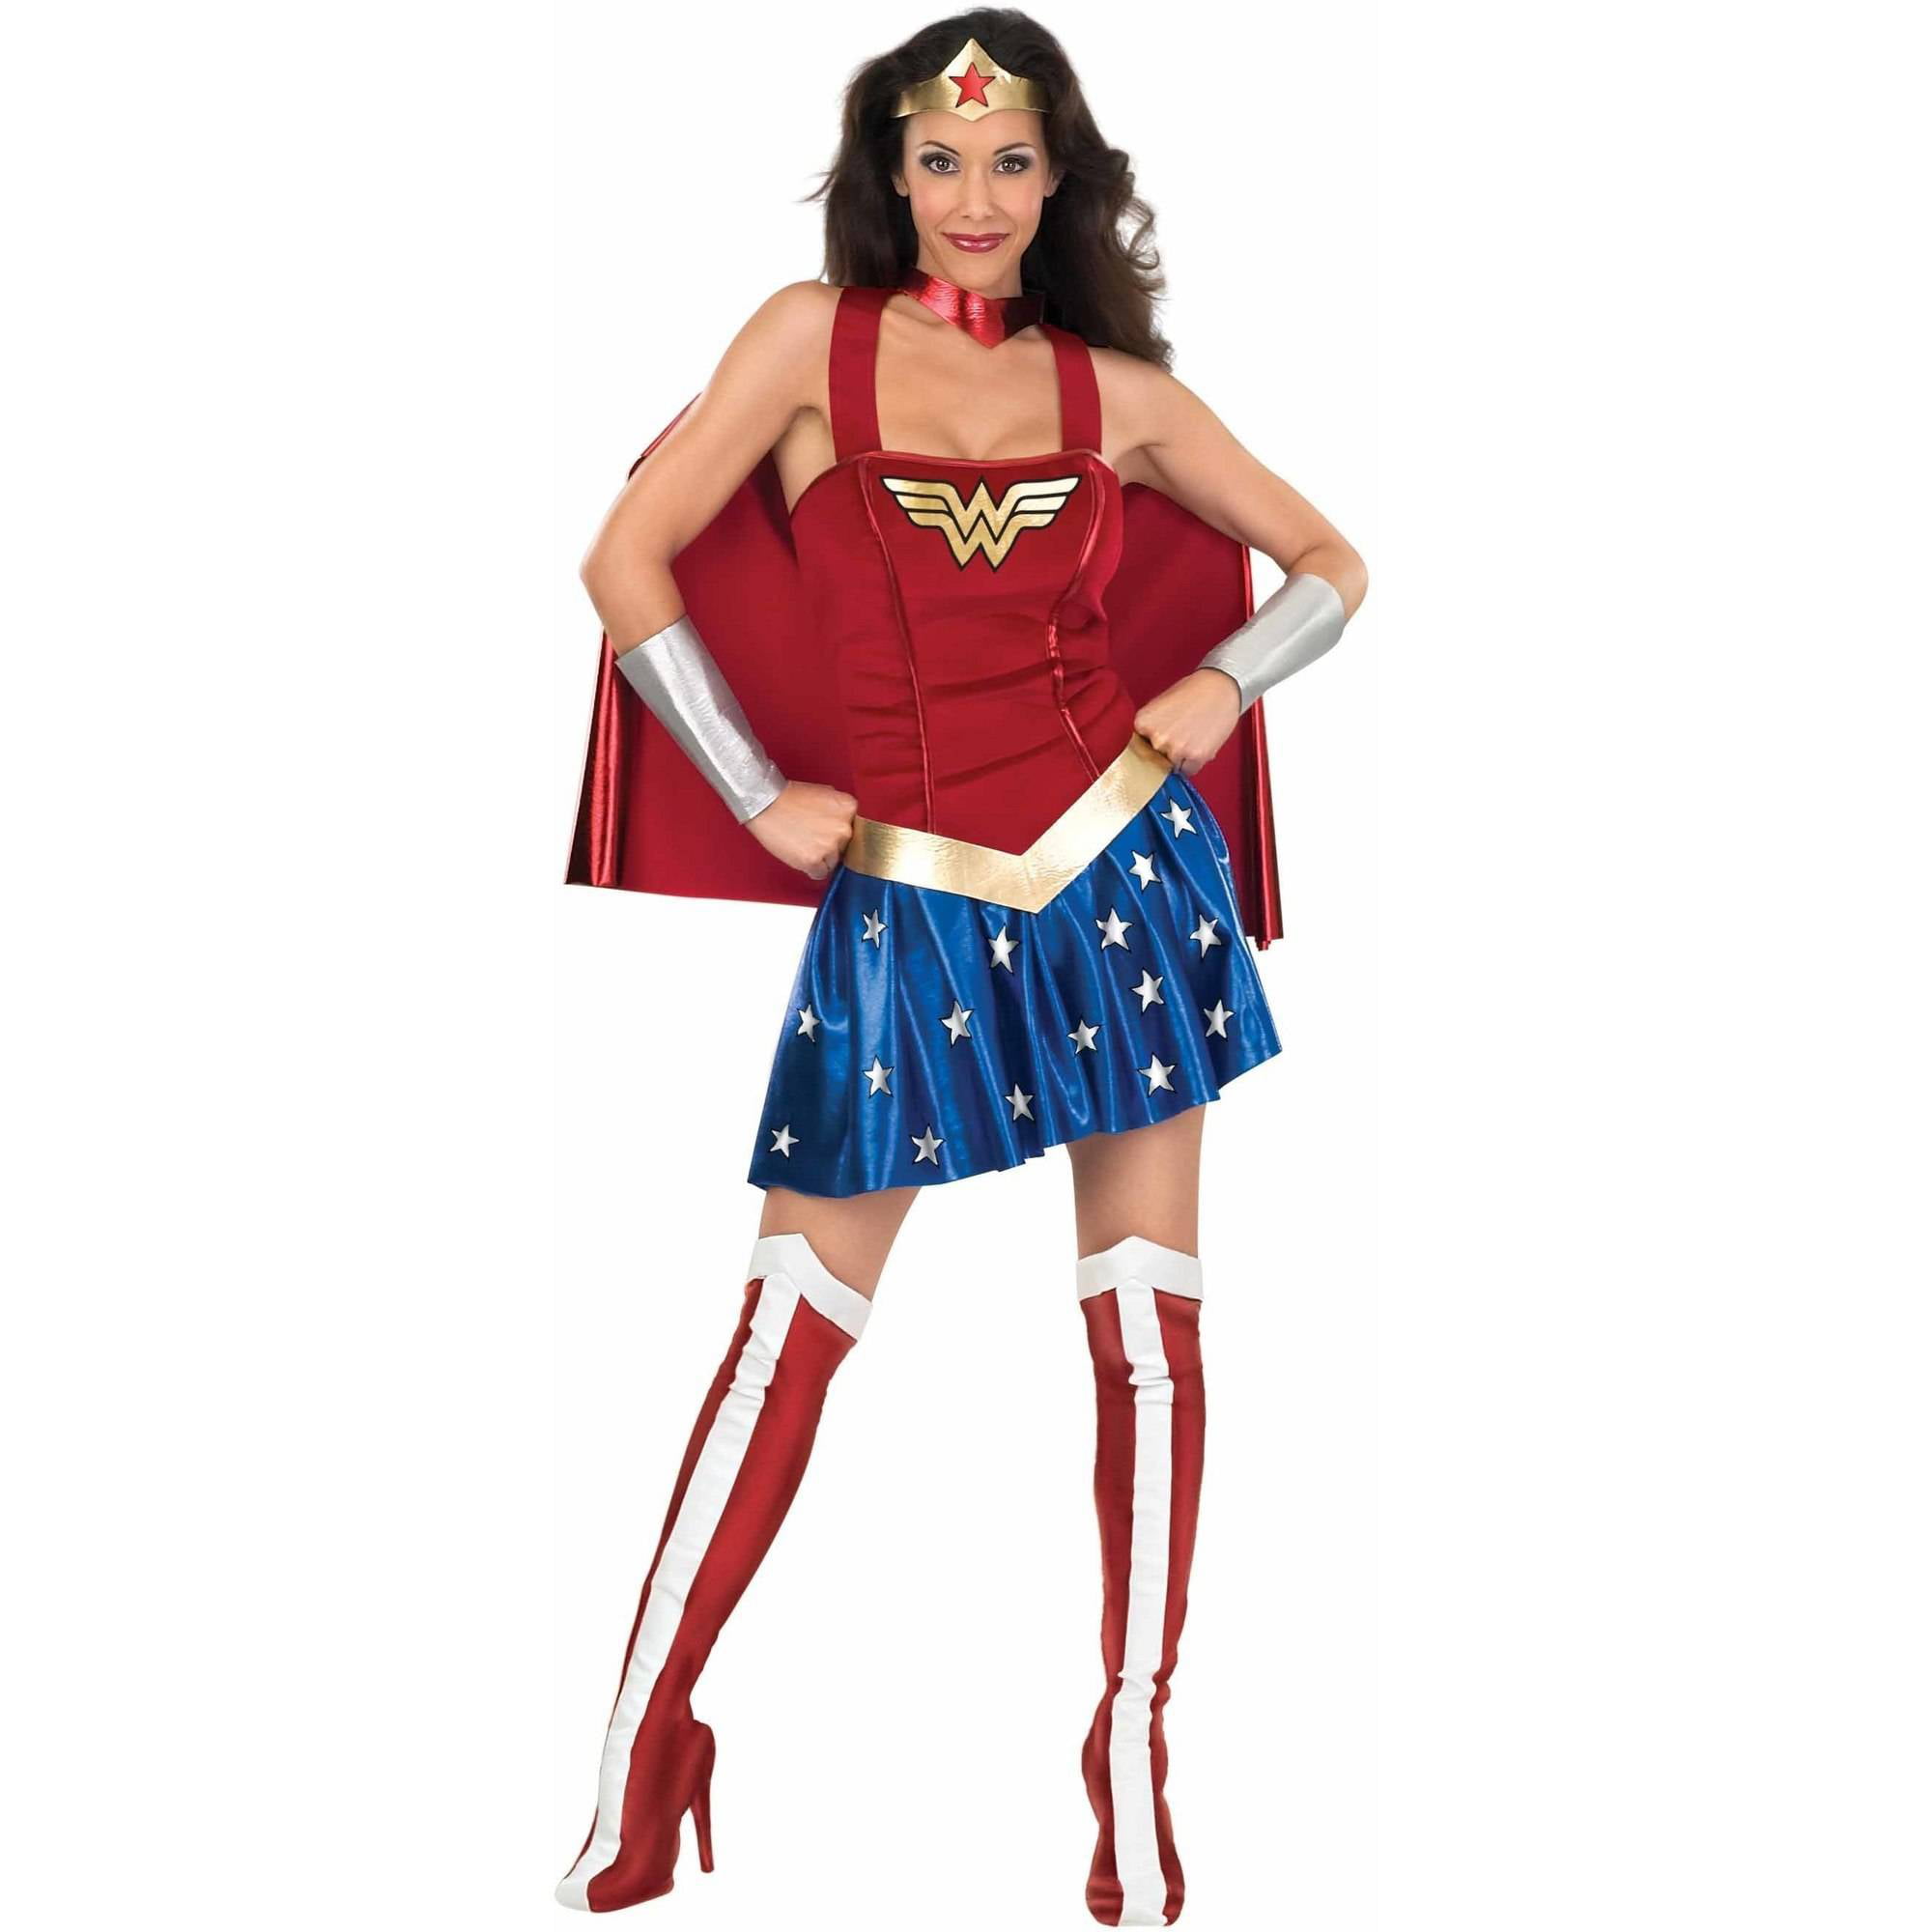 Deluxe Wonder Woman Adult Costume, Medium (8-10) - Walmart.com